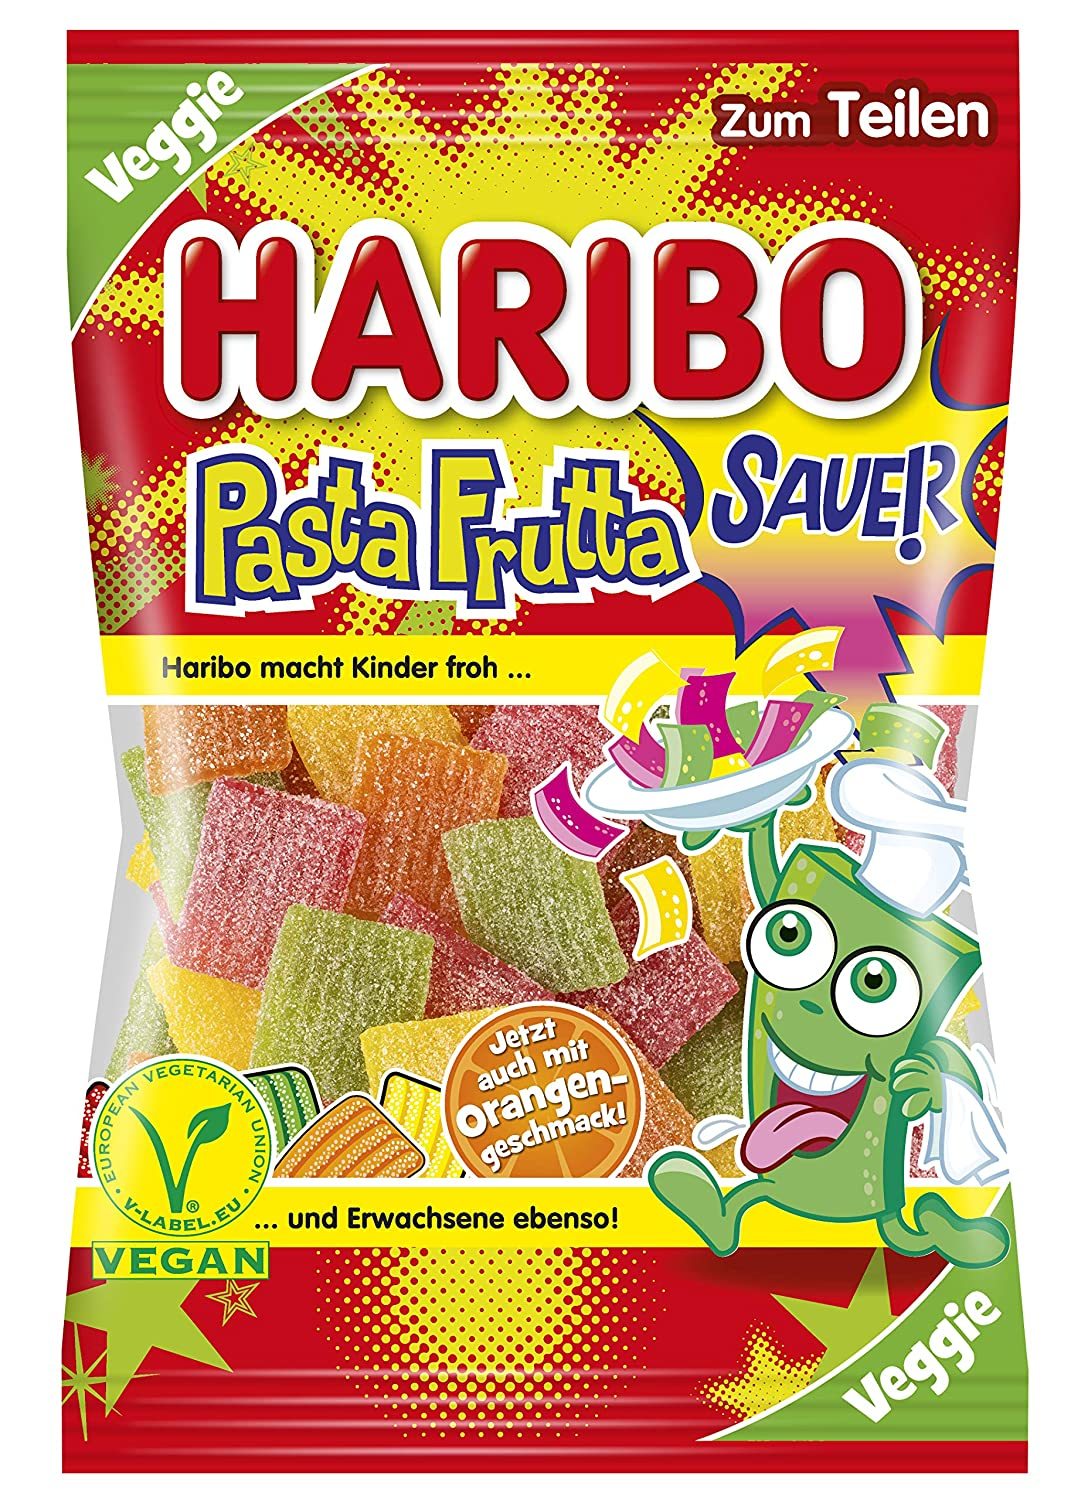 Primary image for Haribo - Pasta Frutta Gummy Candy Sauer (Sour)-160g